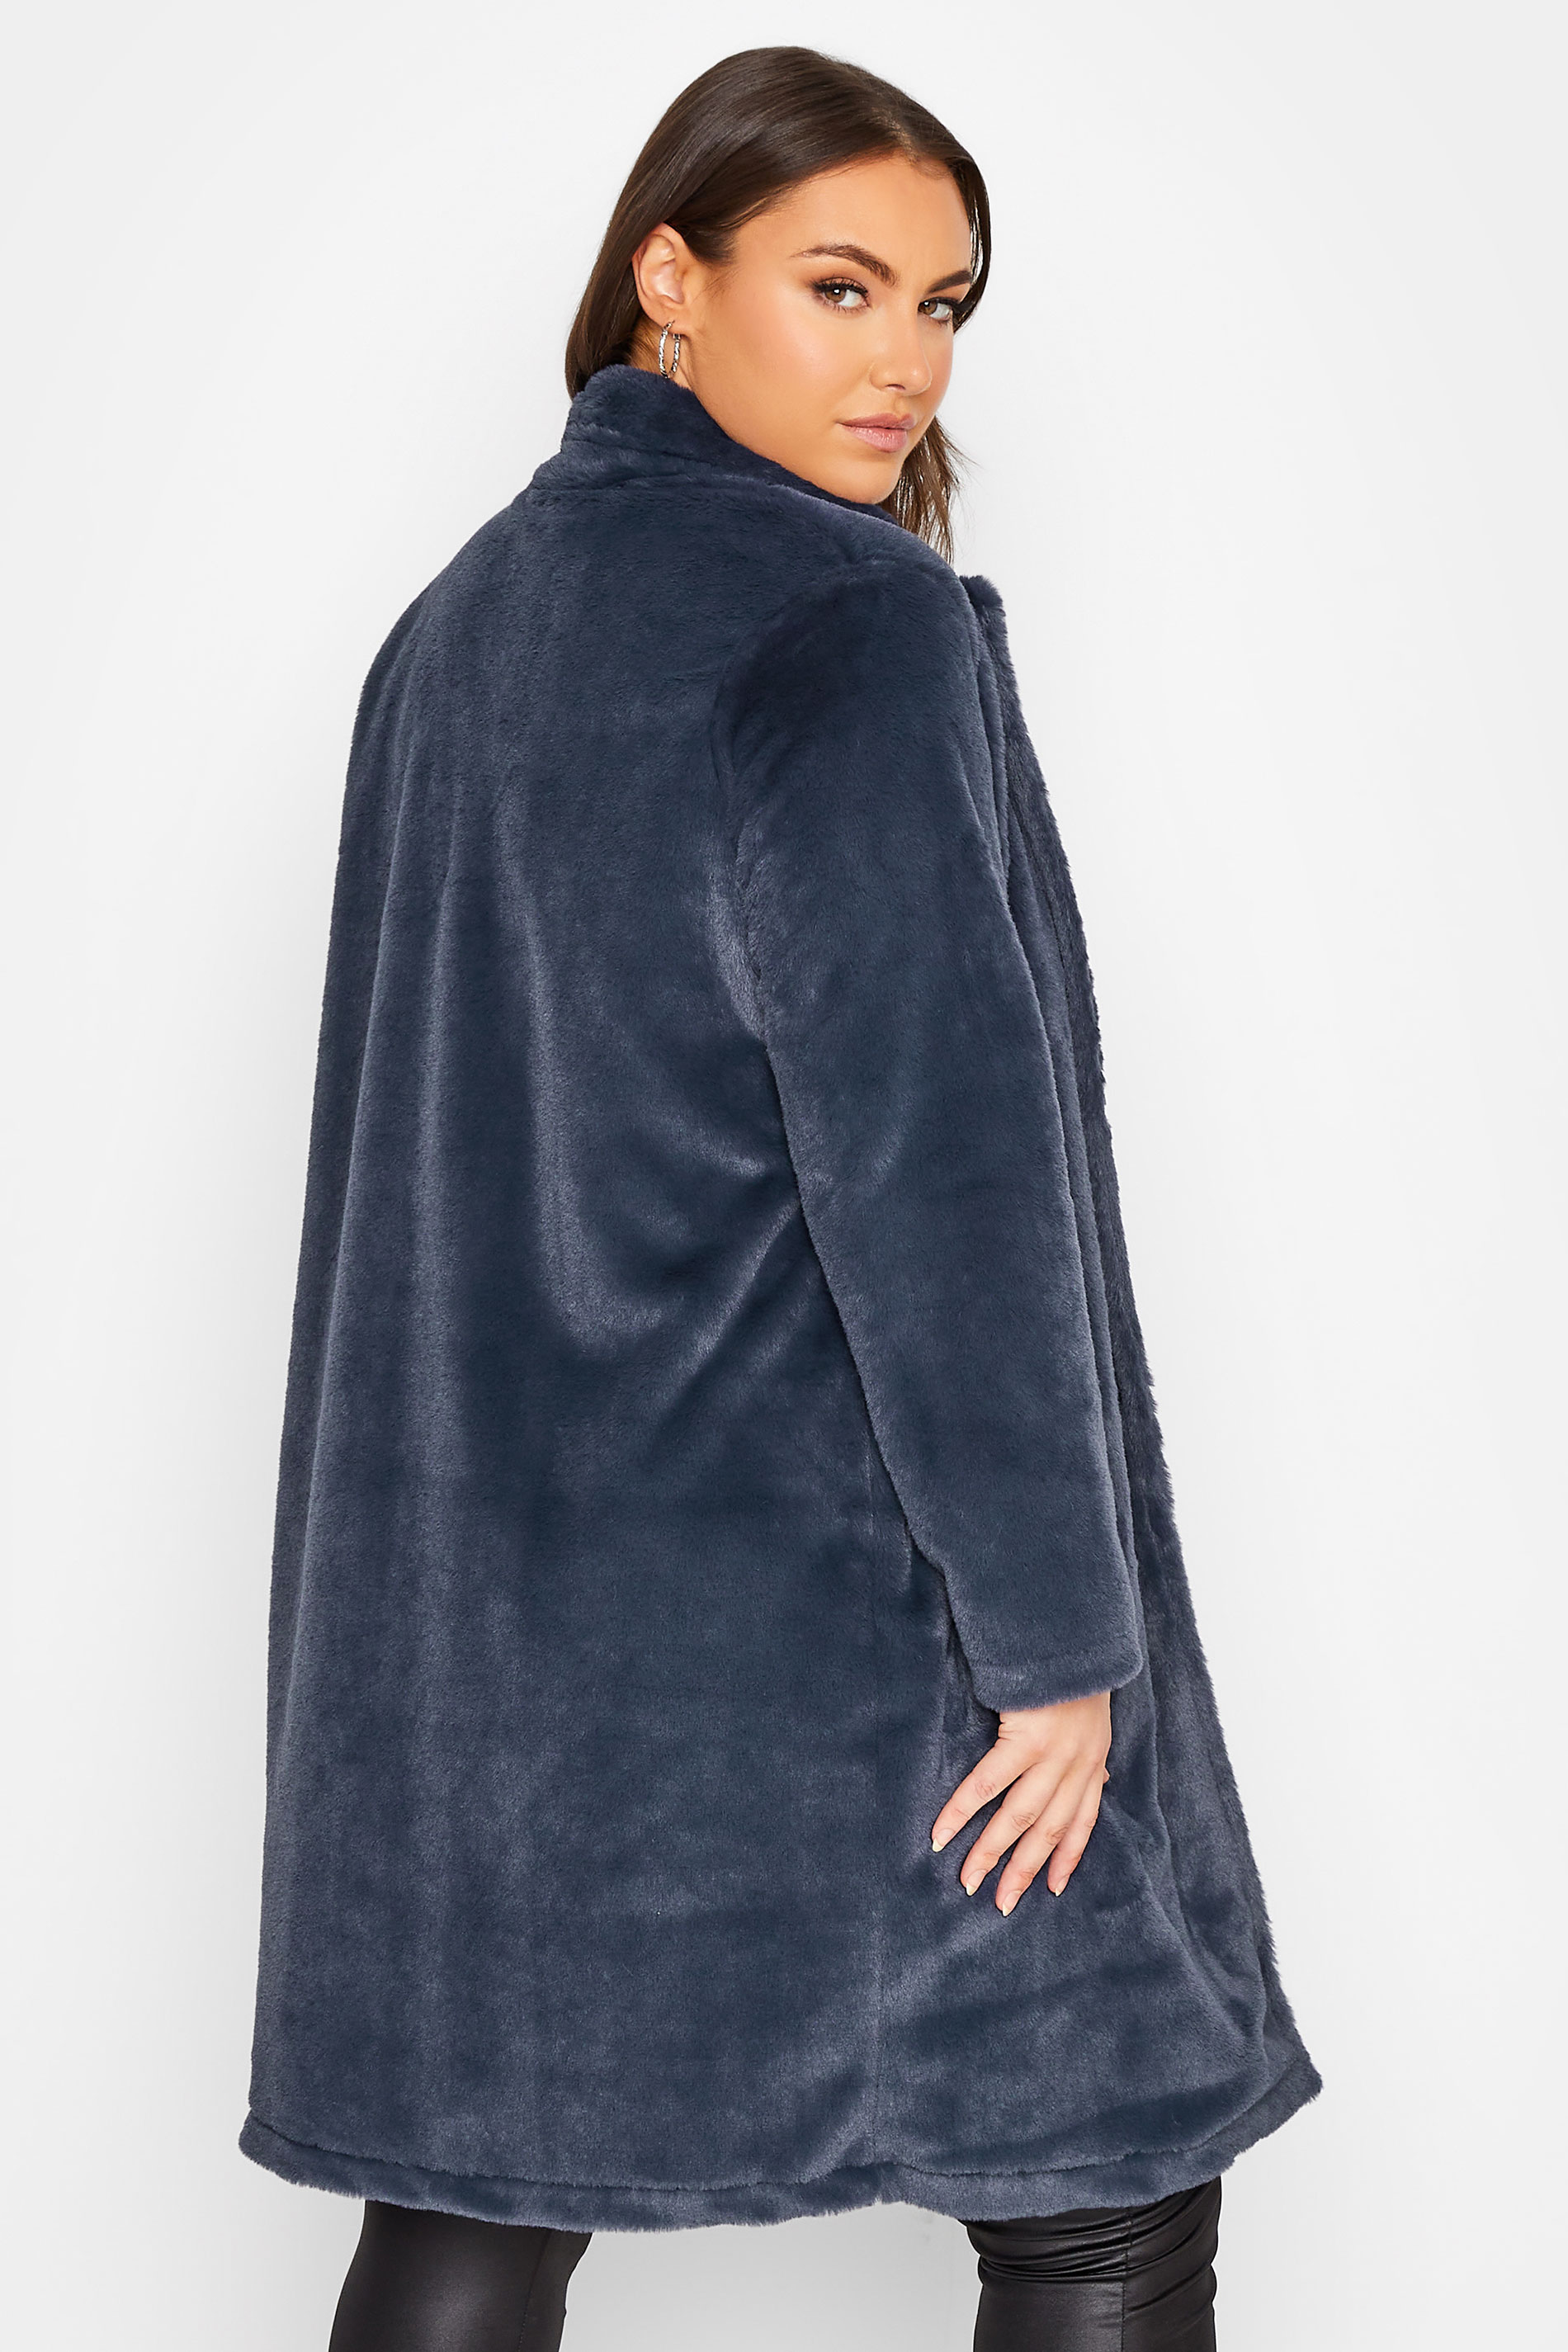 YOURS Plus Size Curve Navy Blue Faux Fur Coat | Yours Clothing